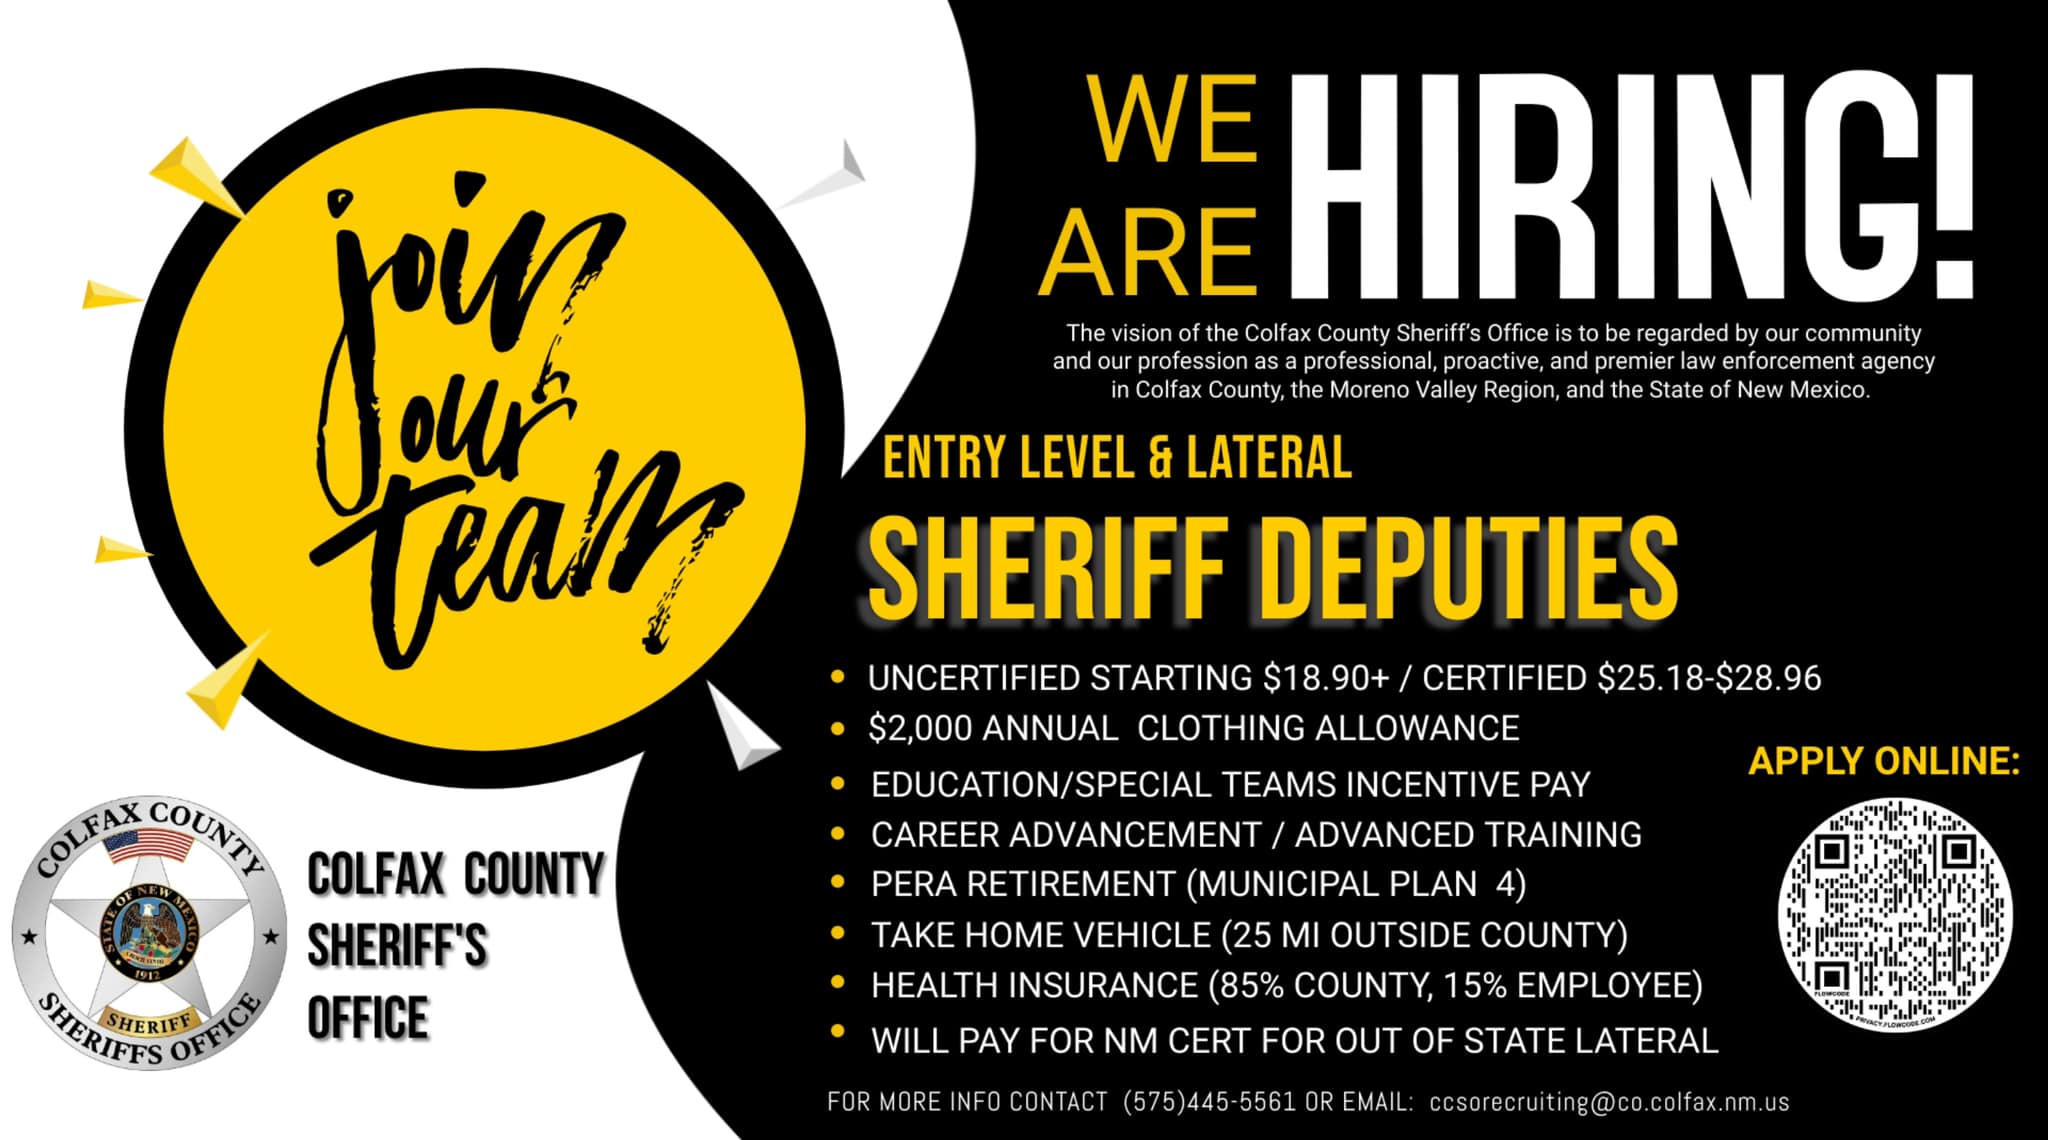 Colfax County Sheriff’s Department Hiring